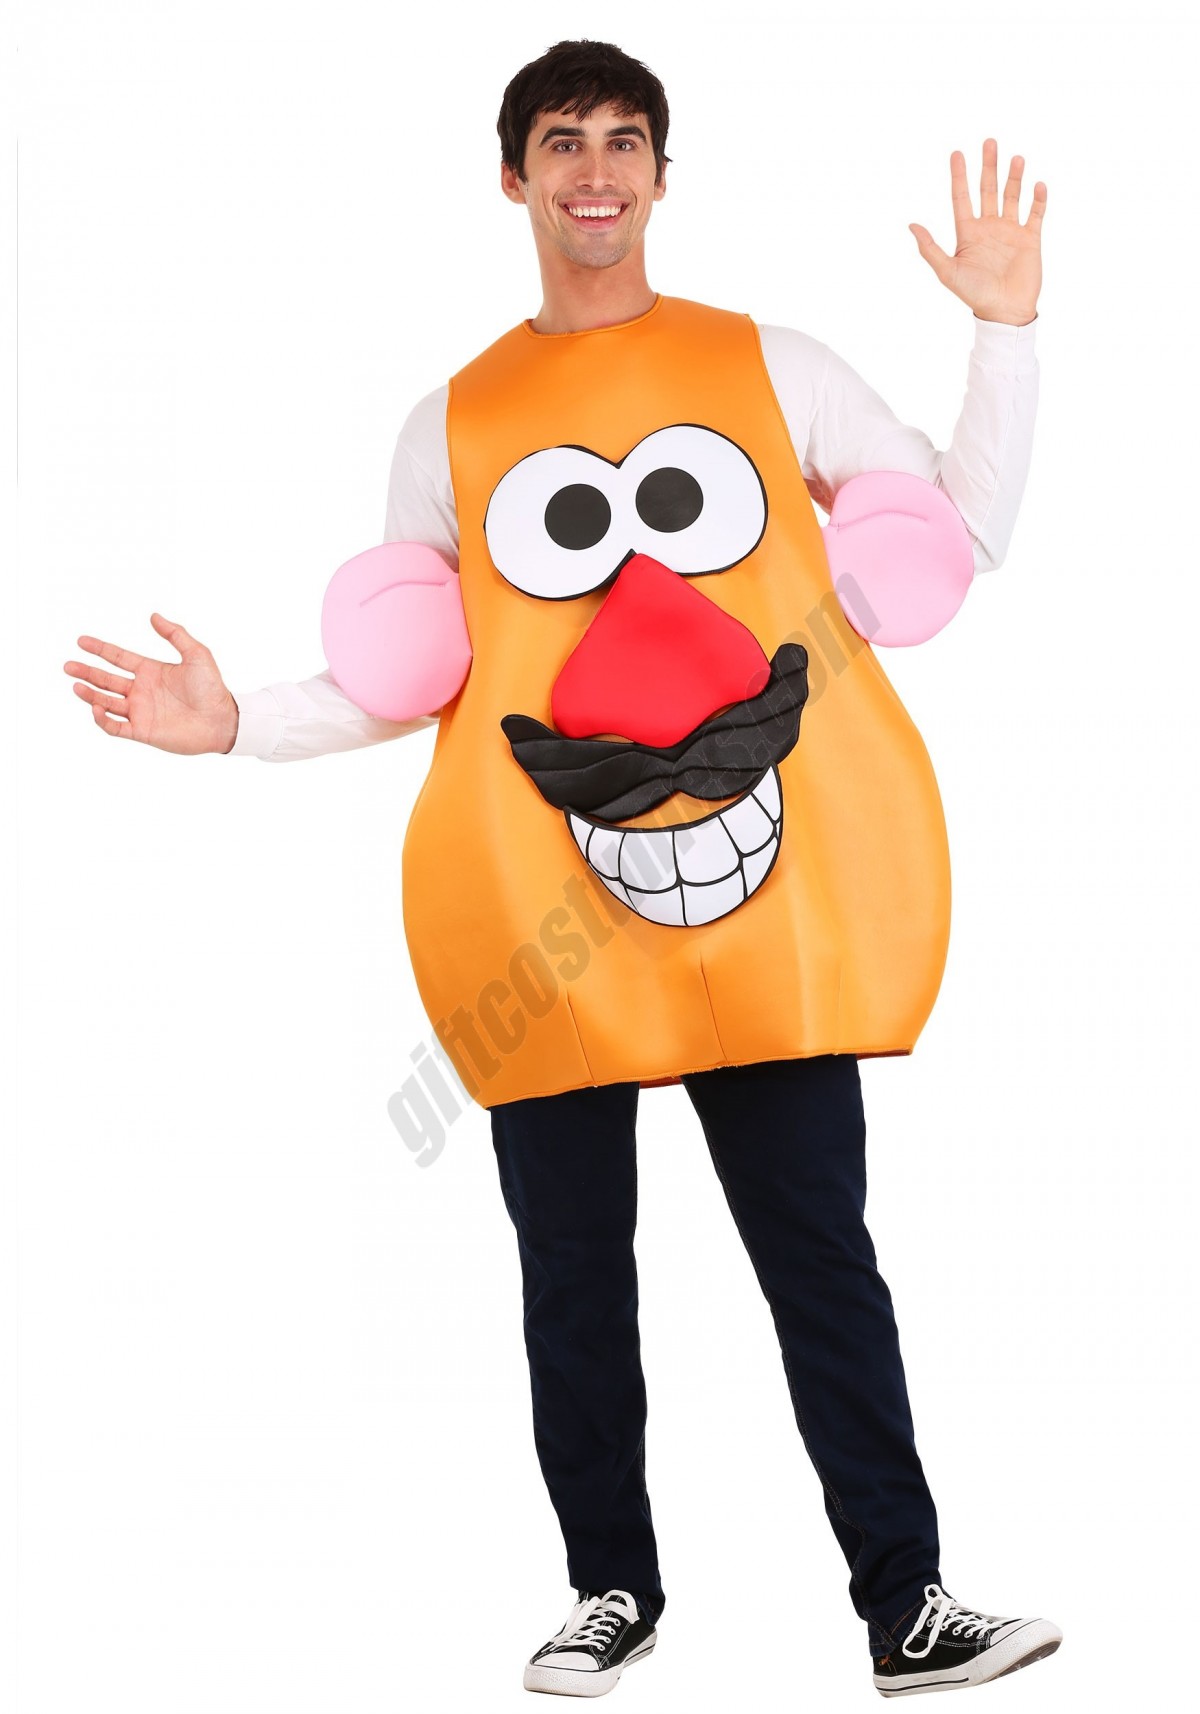 Adult Plus Size Costume Mr / Mrs Potato Head  - Men's - -1